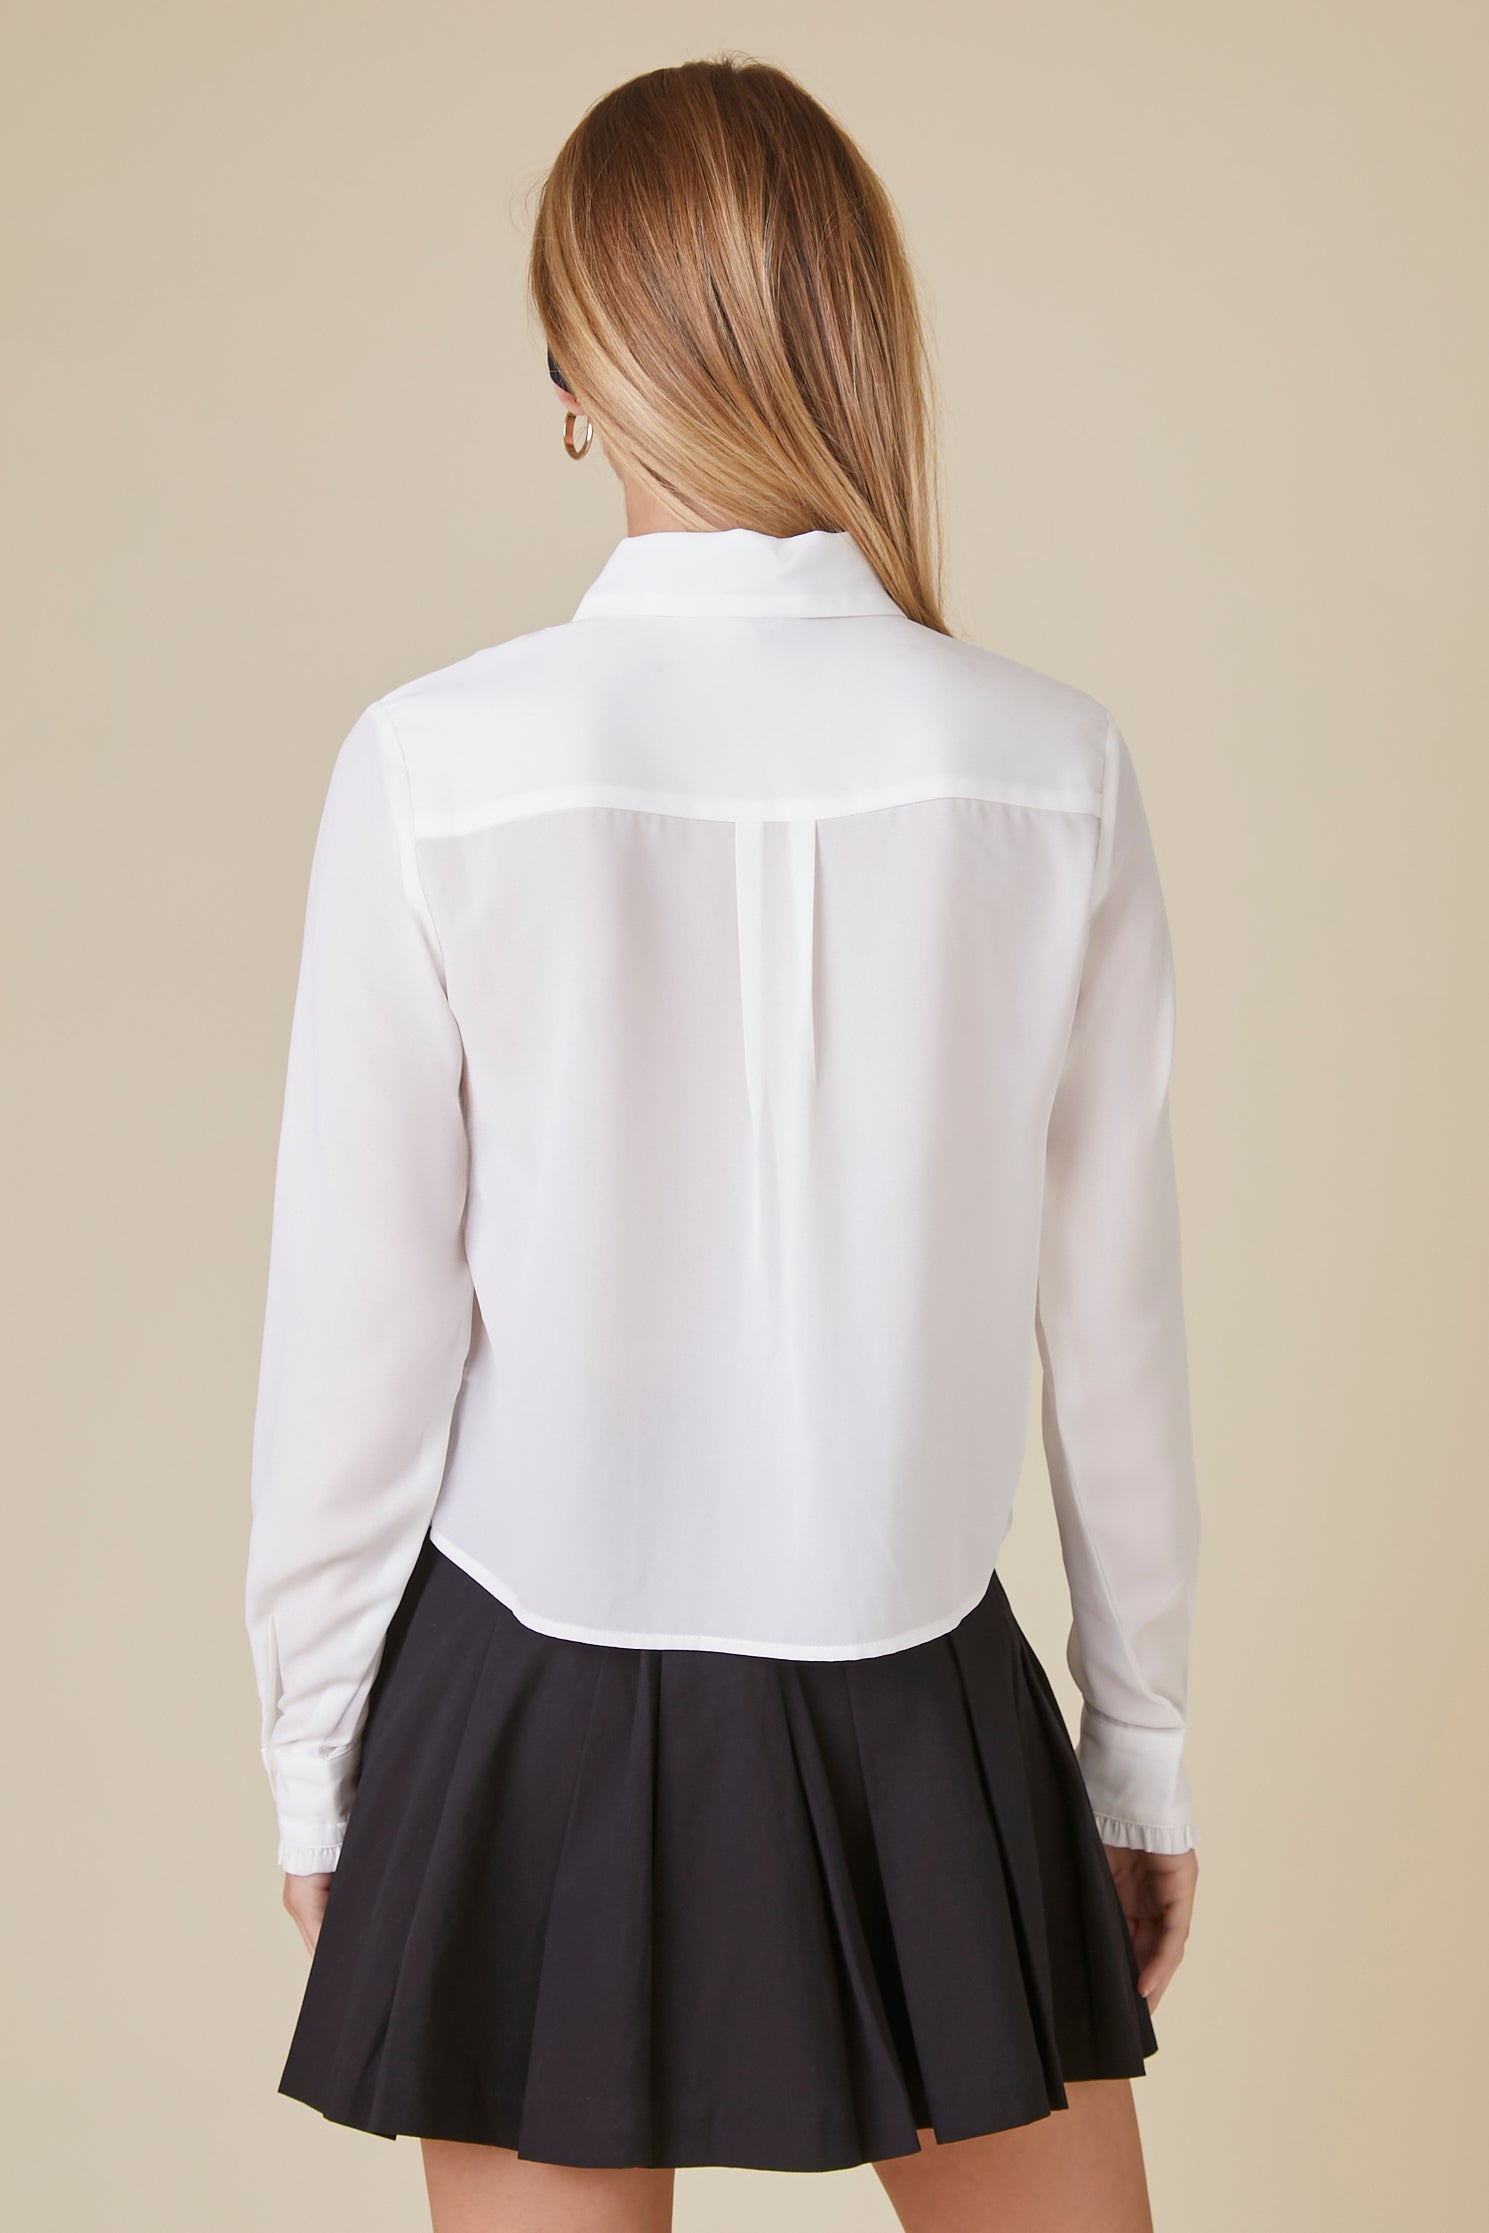 White/Black Uniform Chiffon Bow Shirt 2